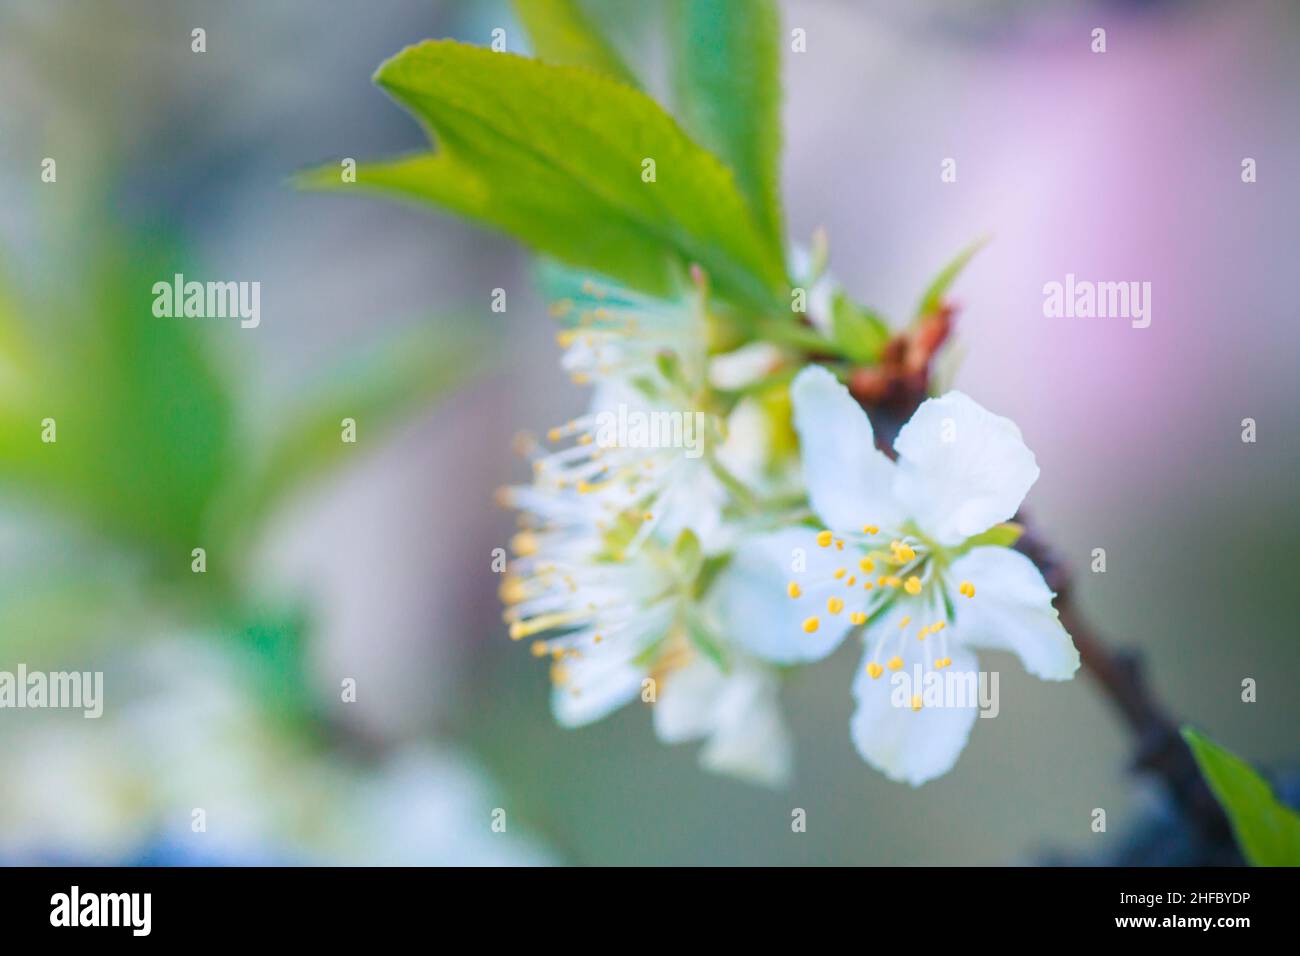 Flowers of Cherry plum or Myrobalan Prunus cerasifera blooming in the spring on branches. Stock Photo